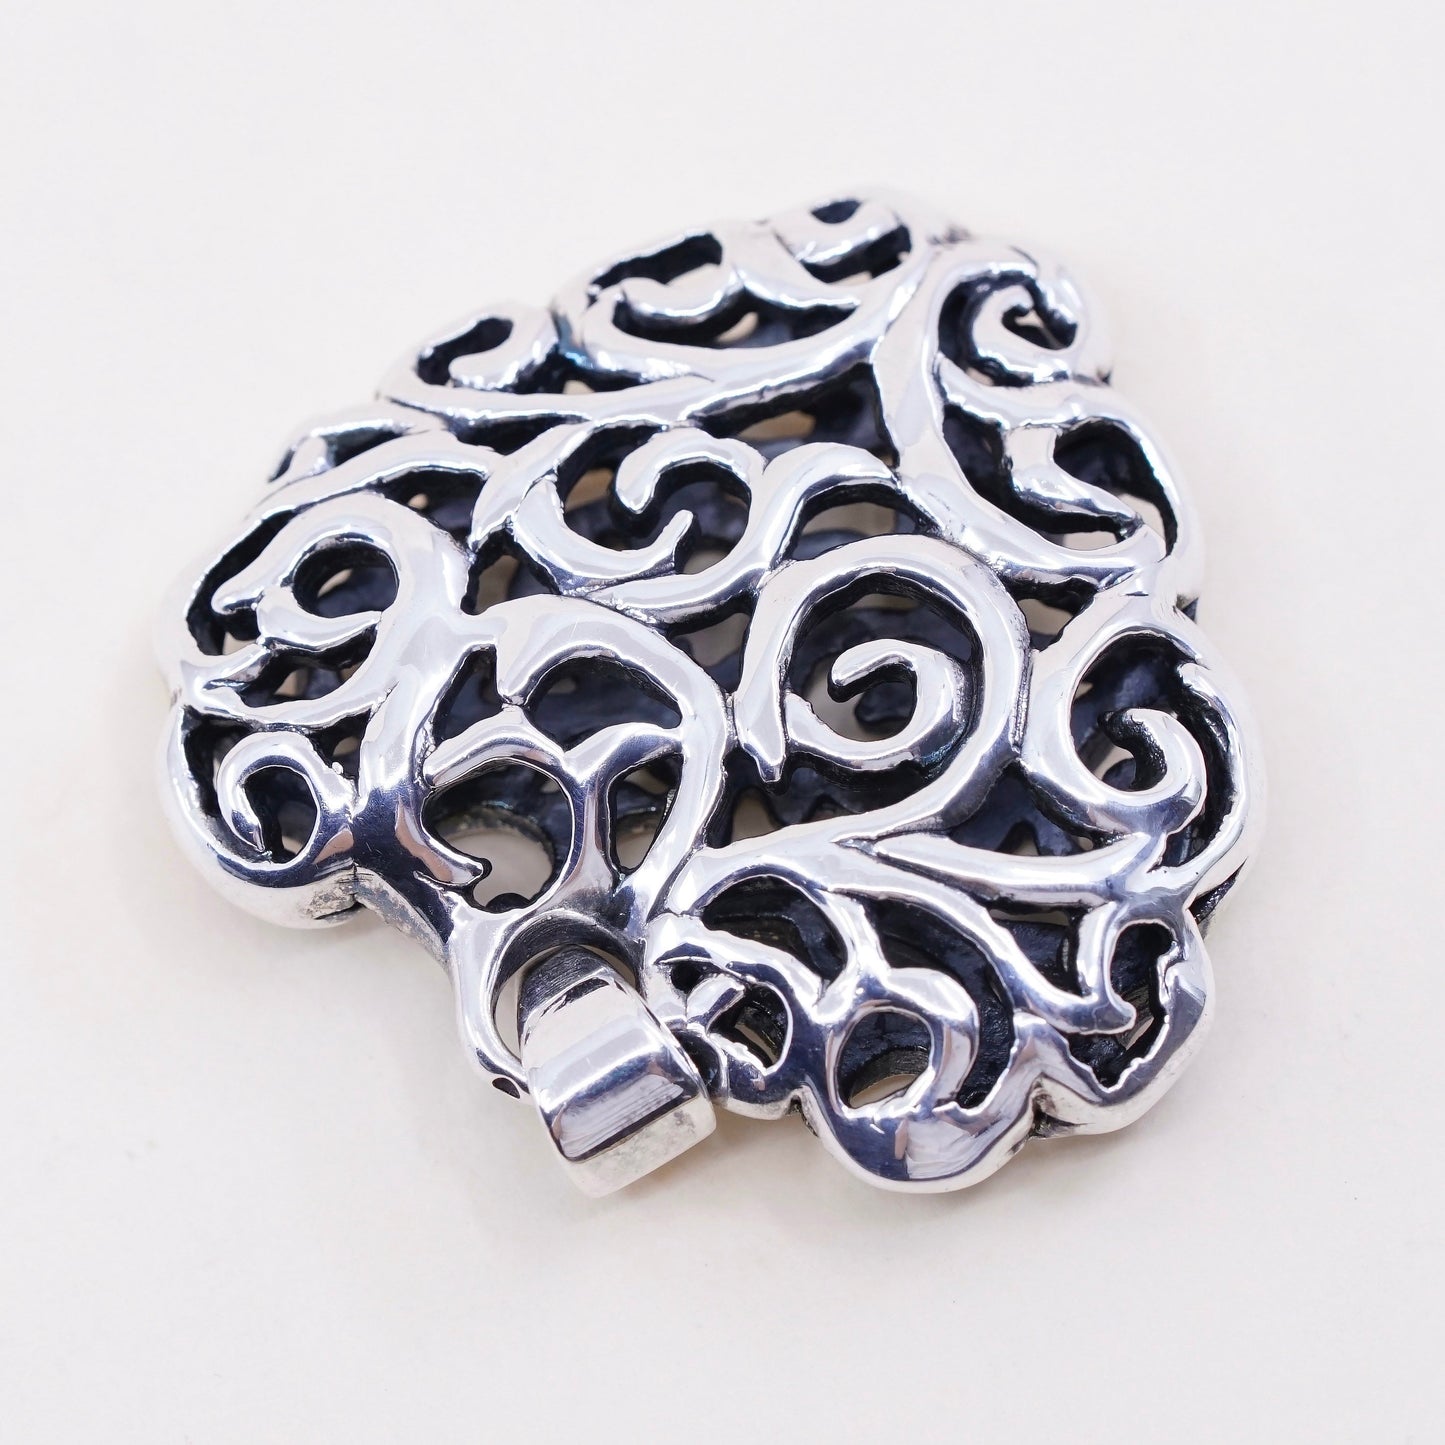 vintage Bali sterling silver handmade pendant, 925 filigree heart charm